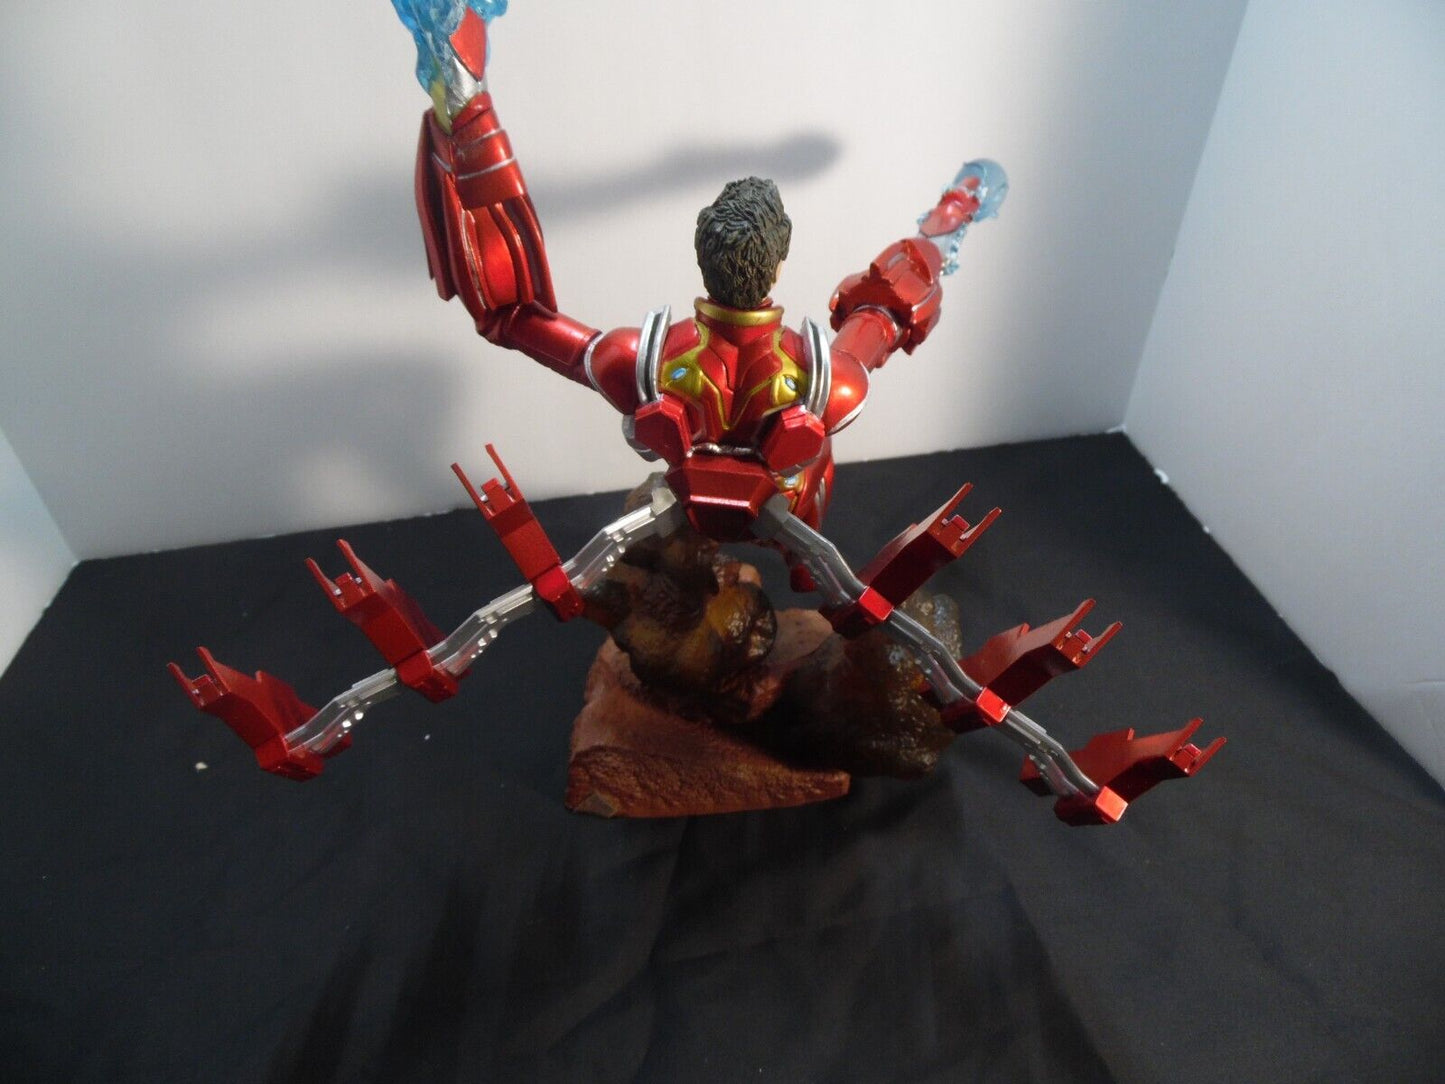 MARVEL Gallery AVENGERS ENDGAME IRON MAN PVC Diorama Toy Figure Statue